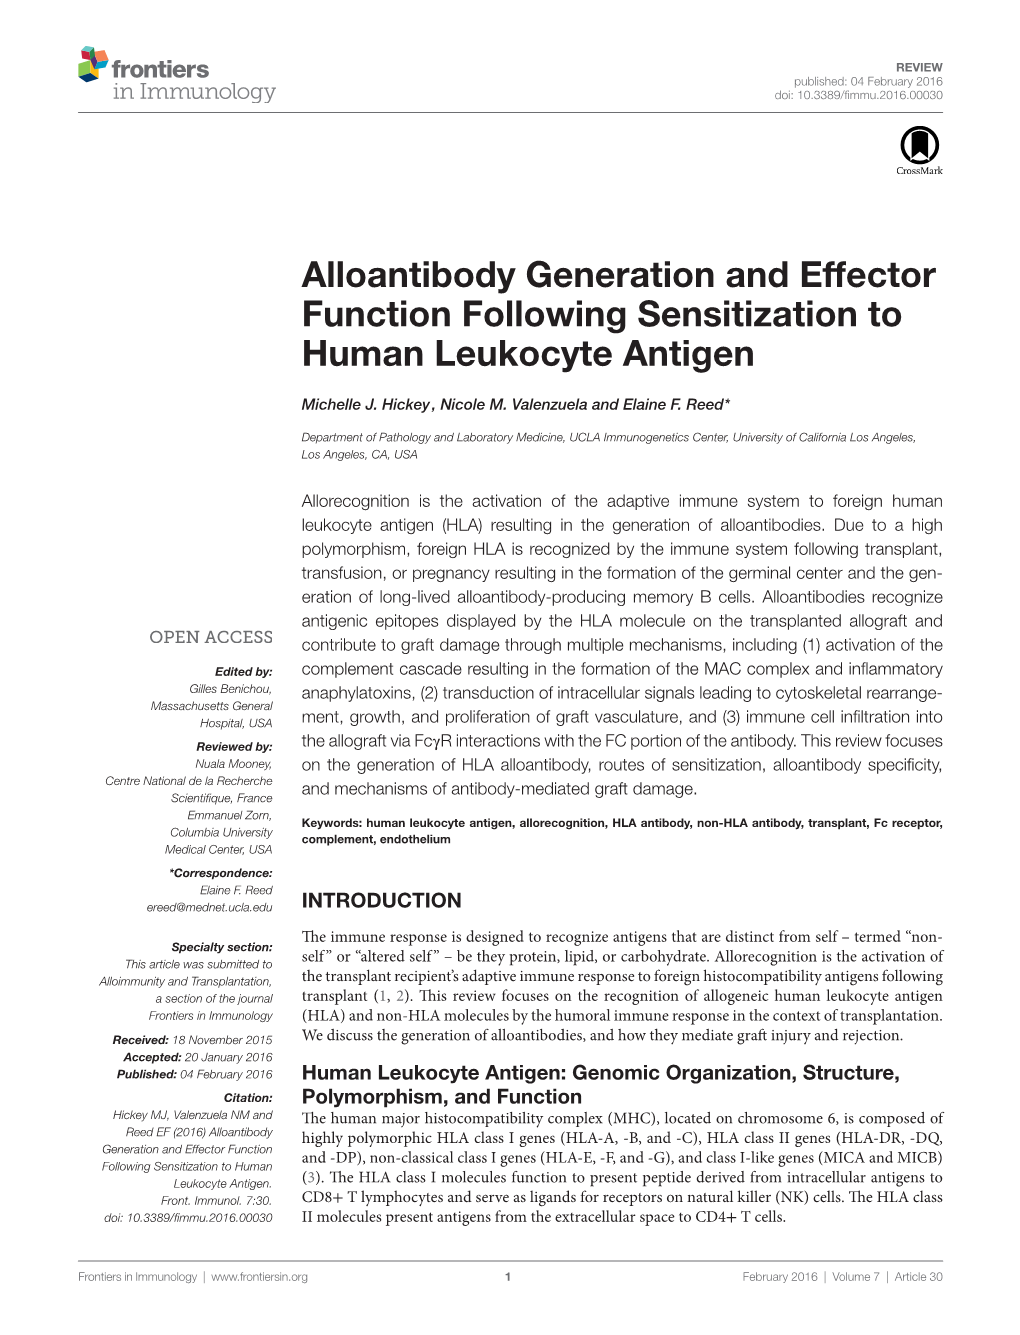 Alloantibody Generation and Effector Function Following Sensitization to Human Leukocyte Antigen